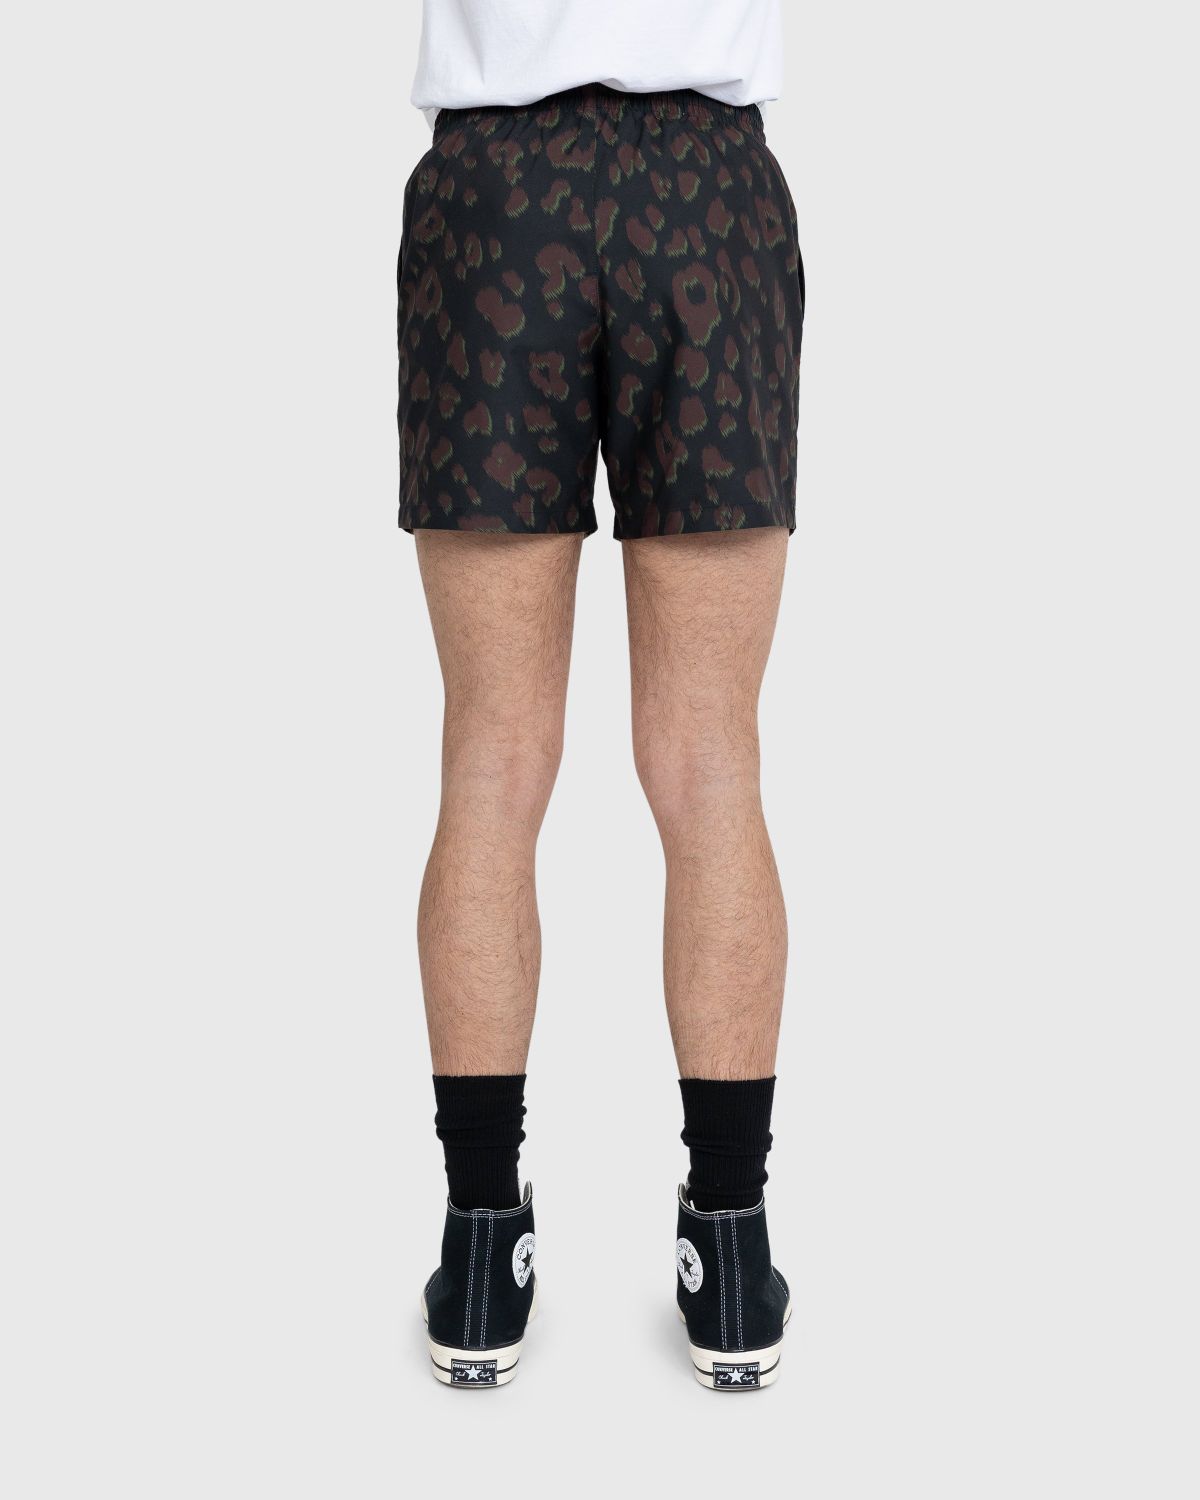 Dries van Noten – Phibbs Shorts - Shorts - Black - Image 4